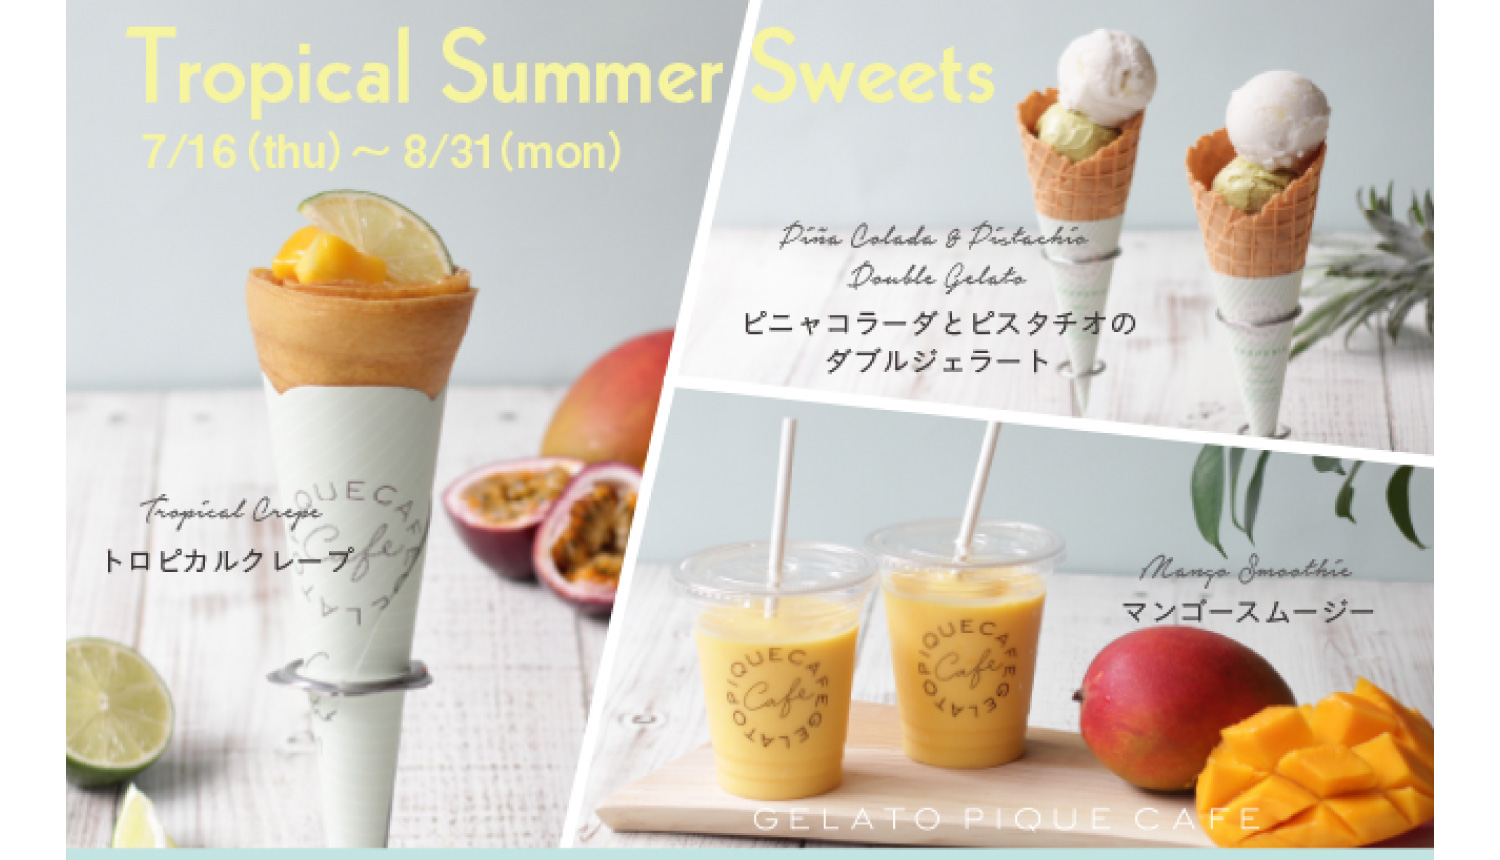 gelato-pique-cafe(ジェラート-ピケ-カフェ)-冰淇淋